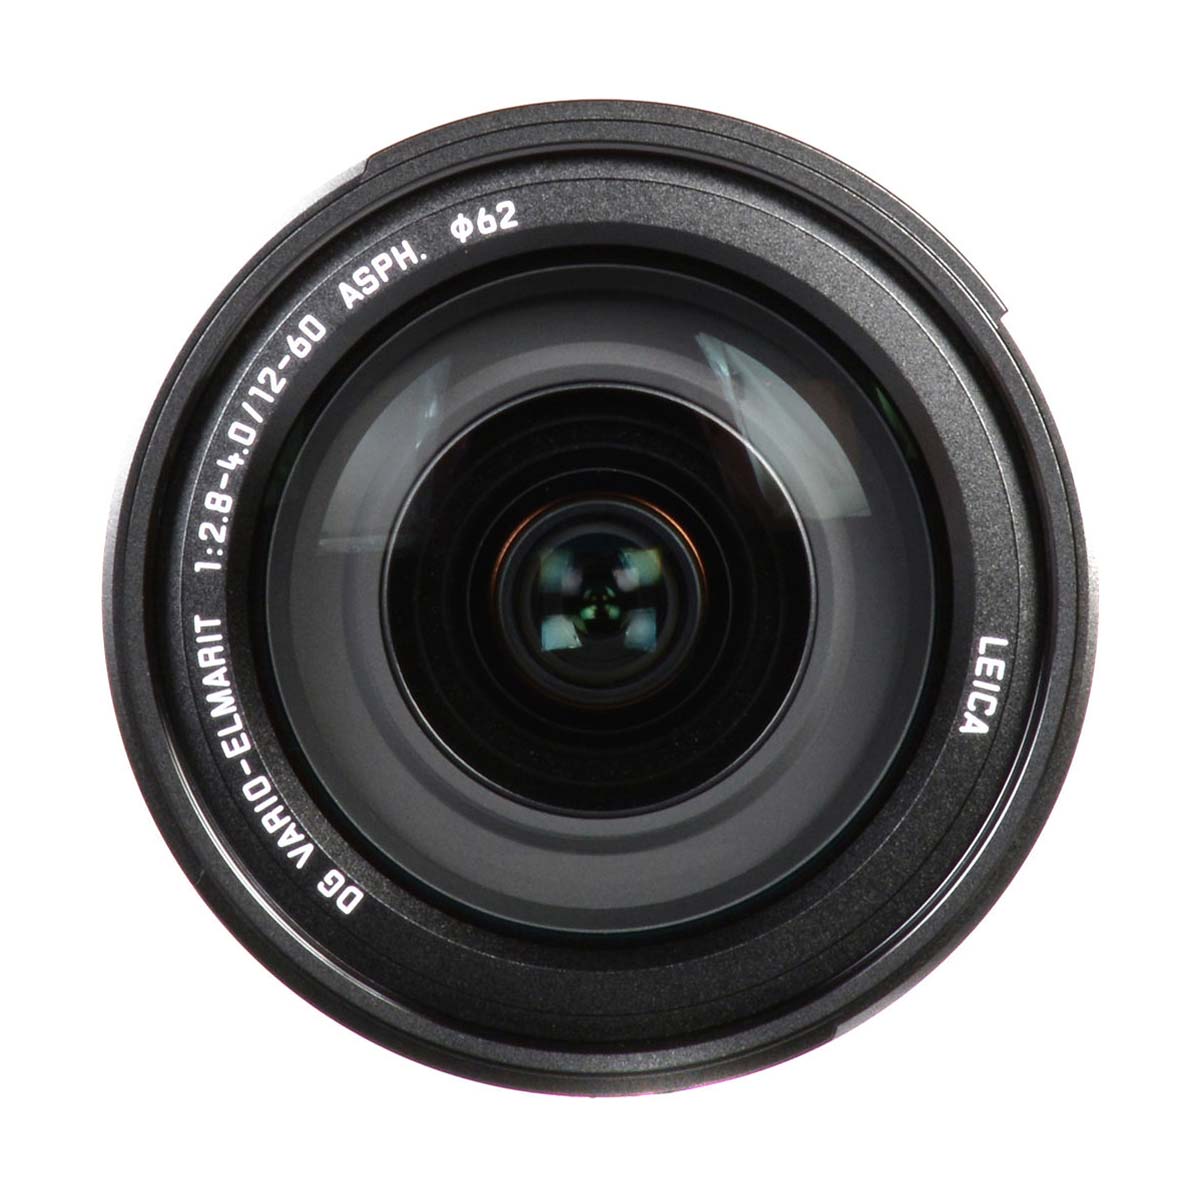 Panasonic Leica 12-60mm f2.8-4 ASPH OIS Micro Four Thirds Lens